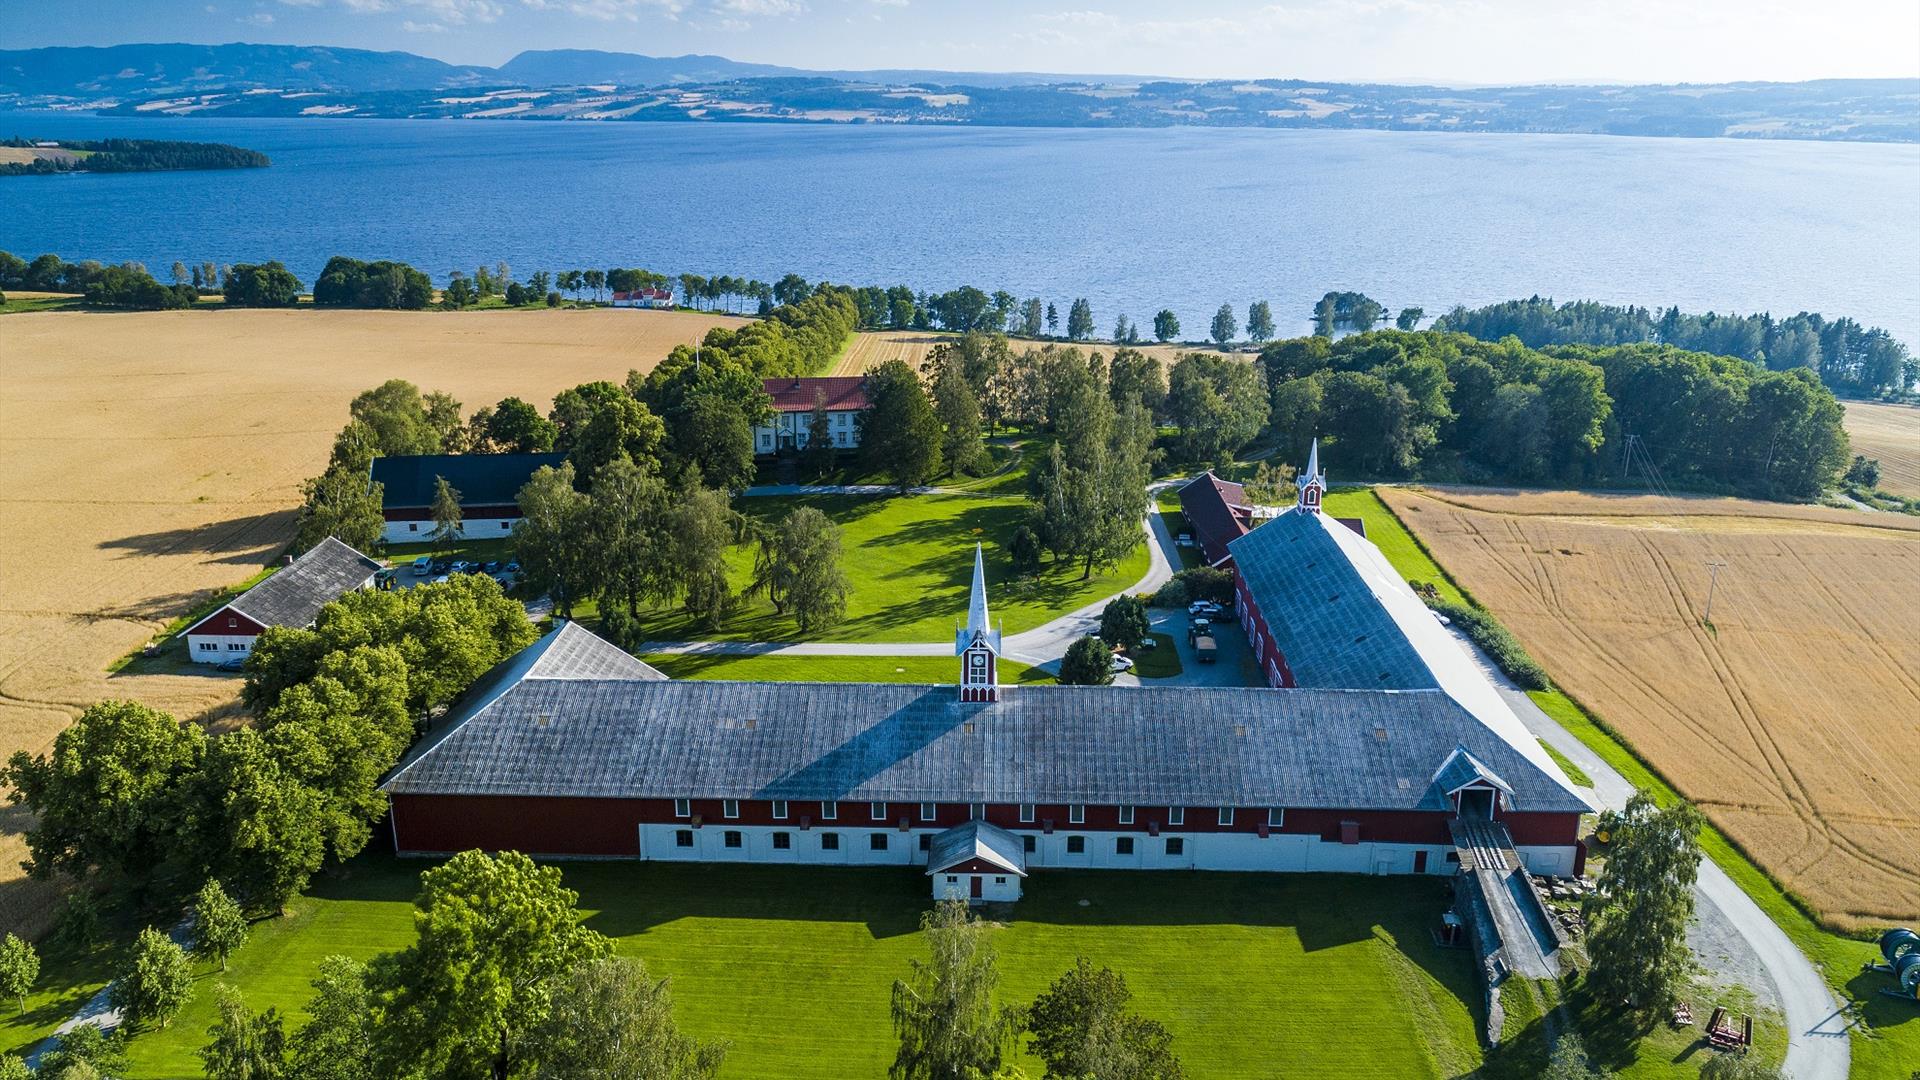 Hoel Gård på Nes halvøya, midt i Mjøsa